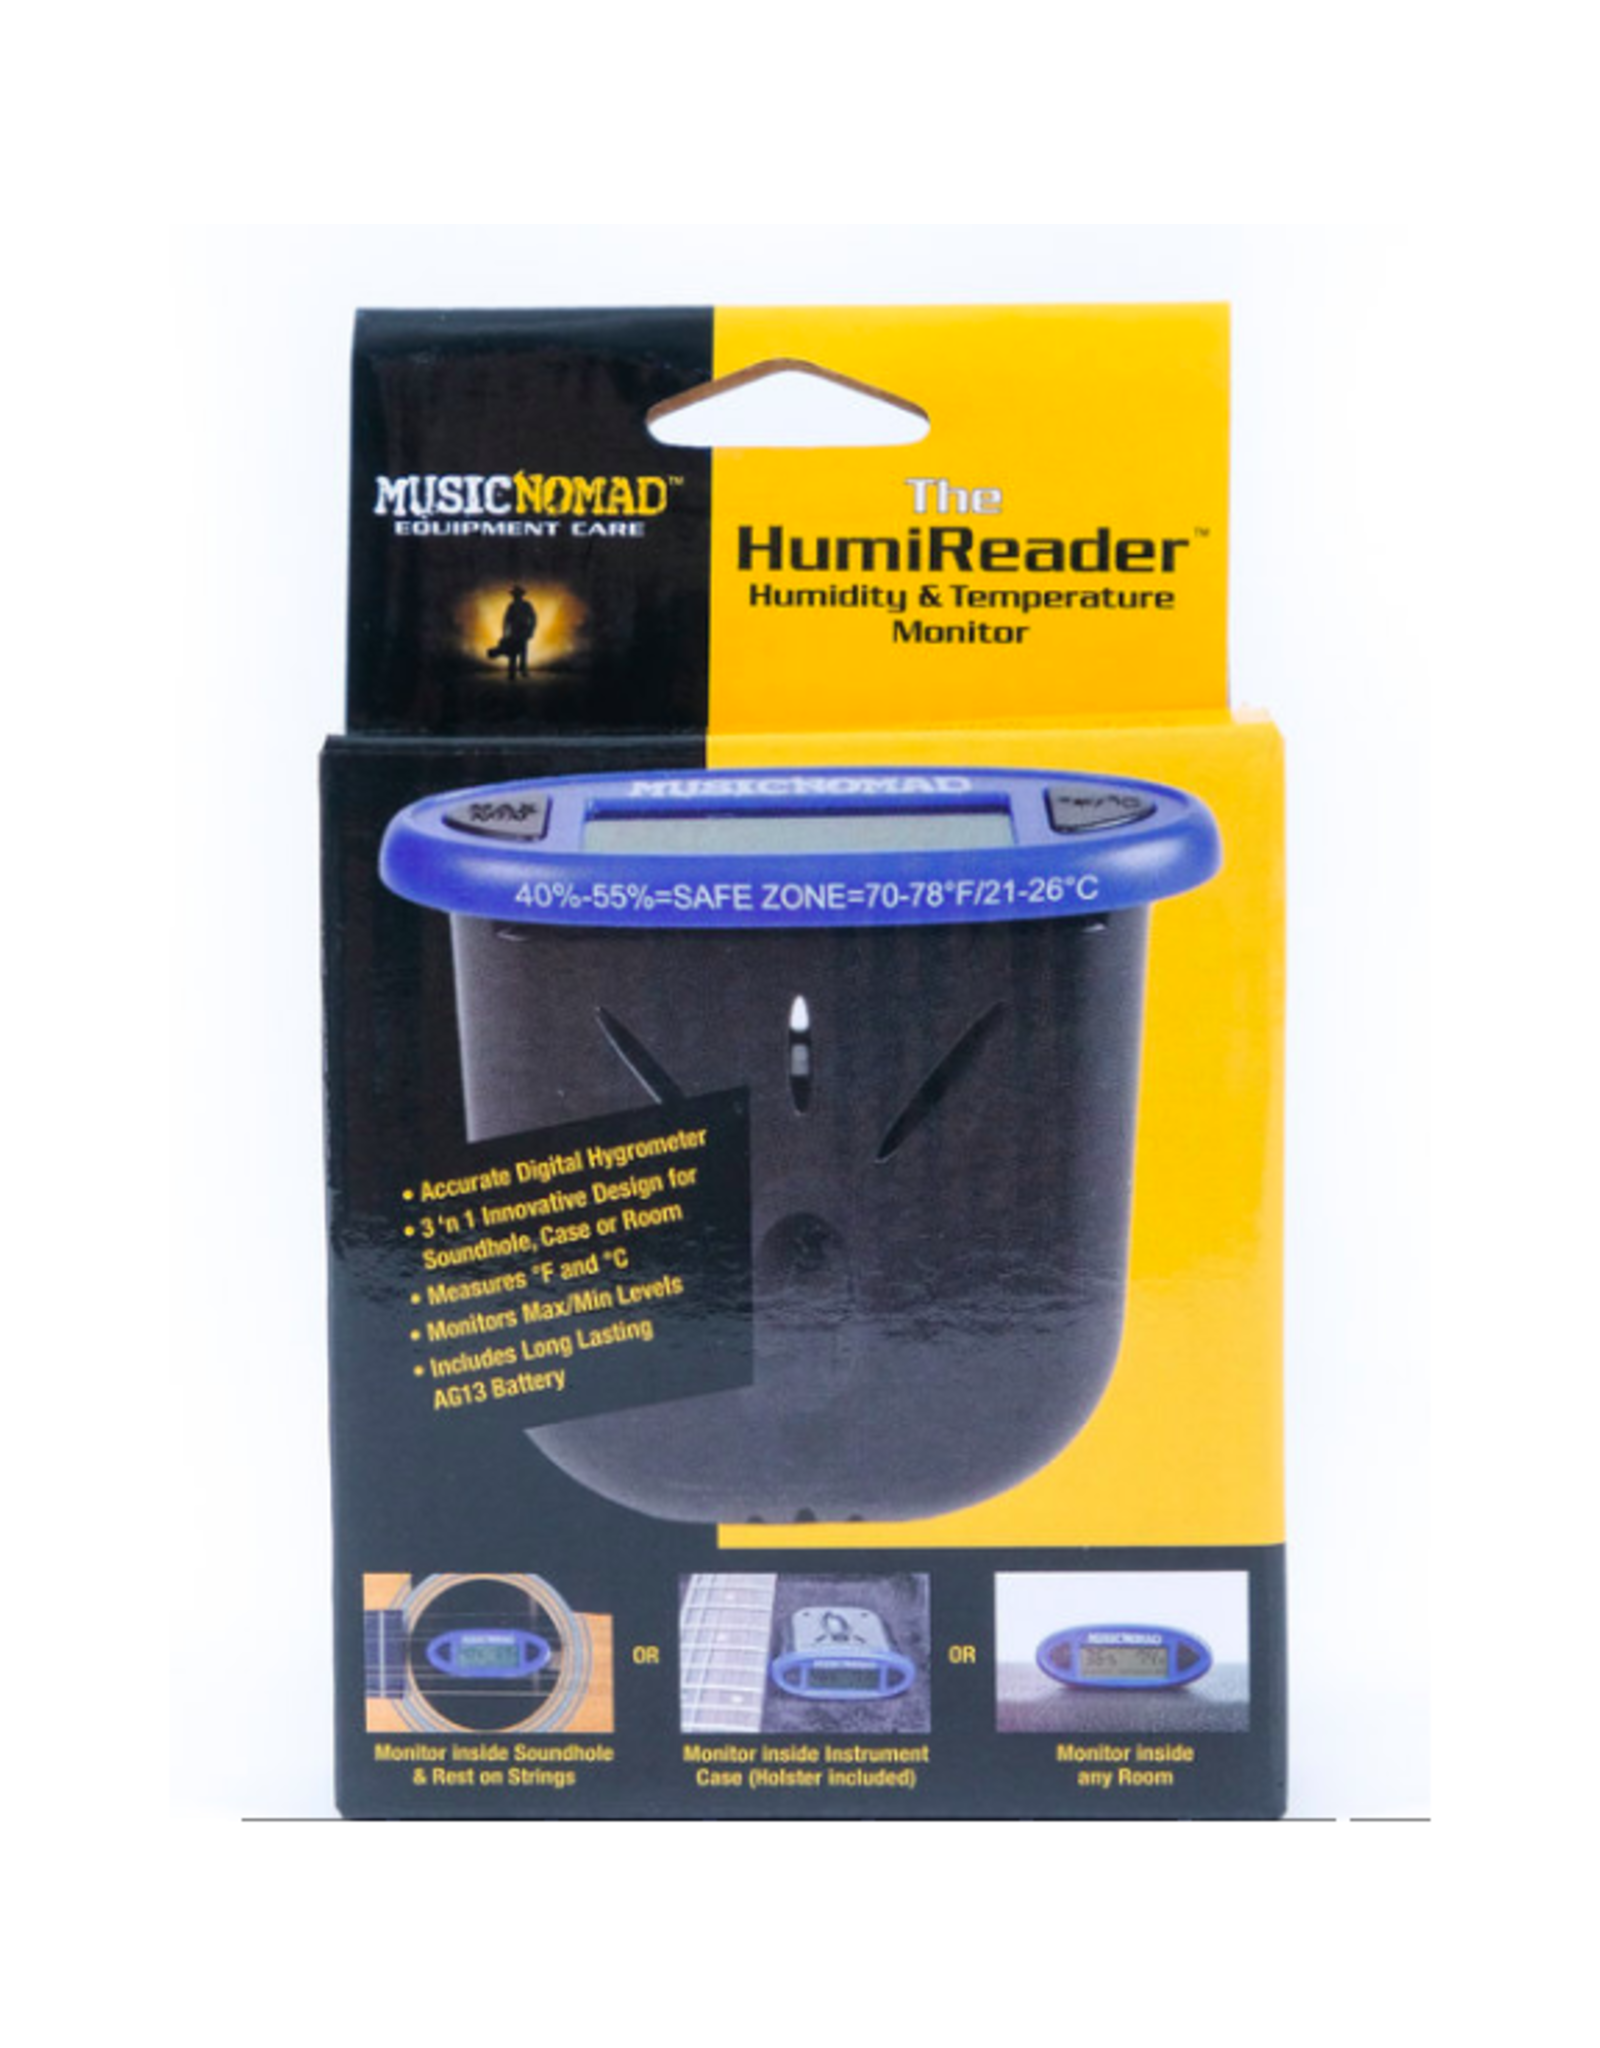 MUSIC NOMAD The HumiReader - Humidity & Temperature Monitor